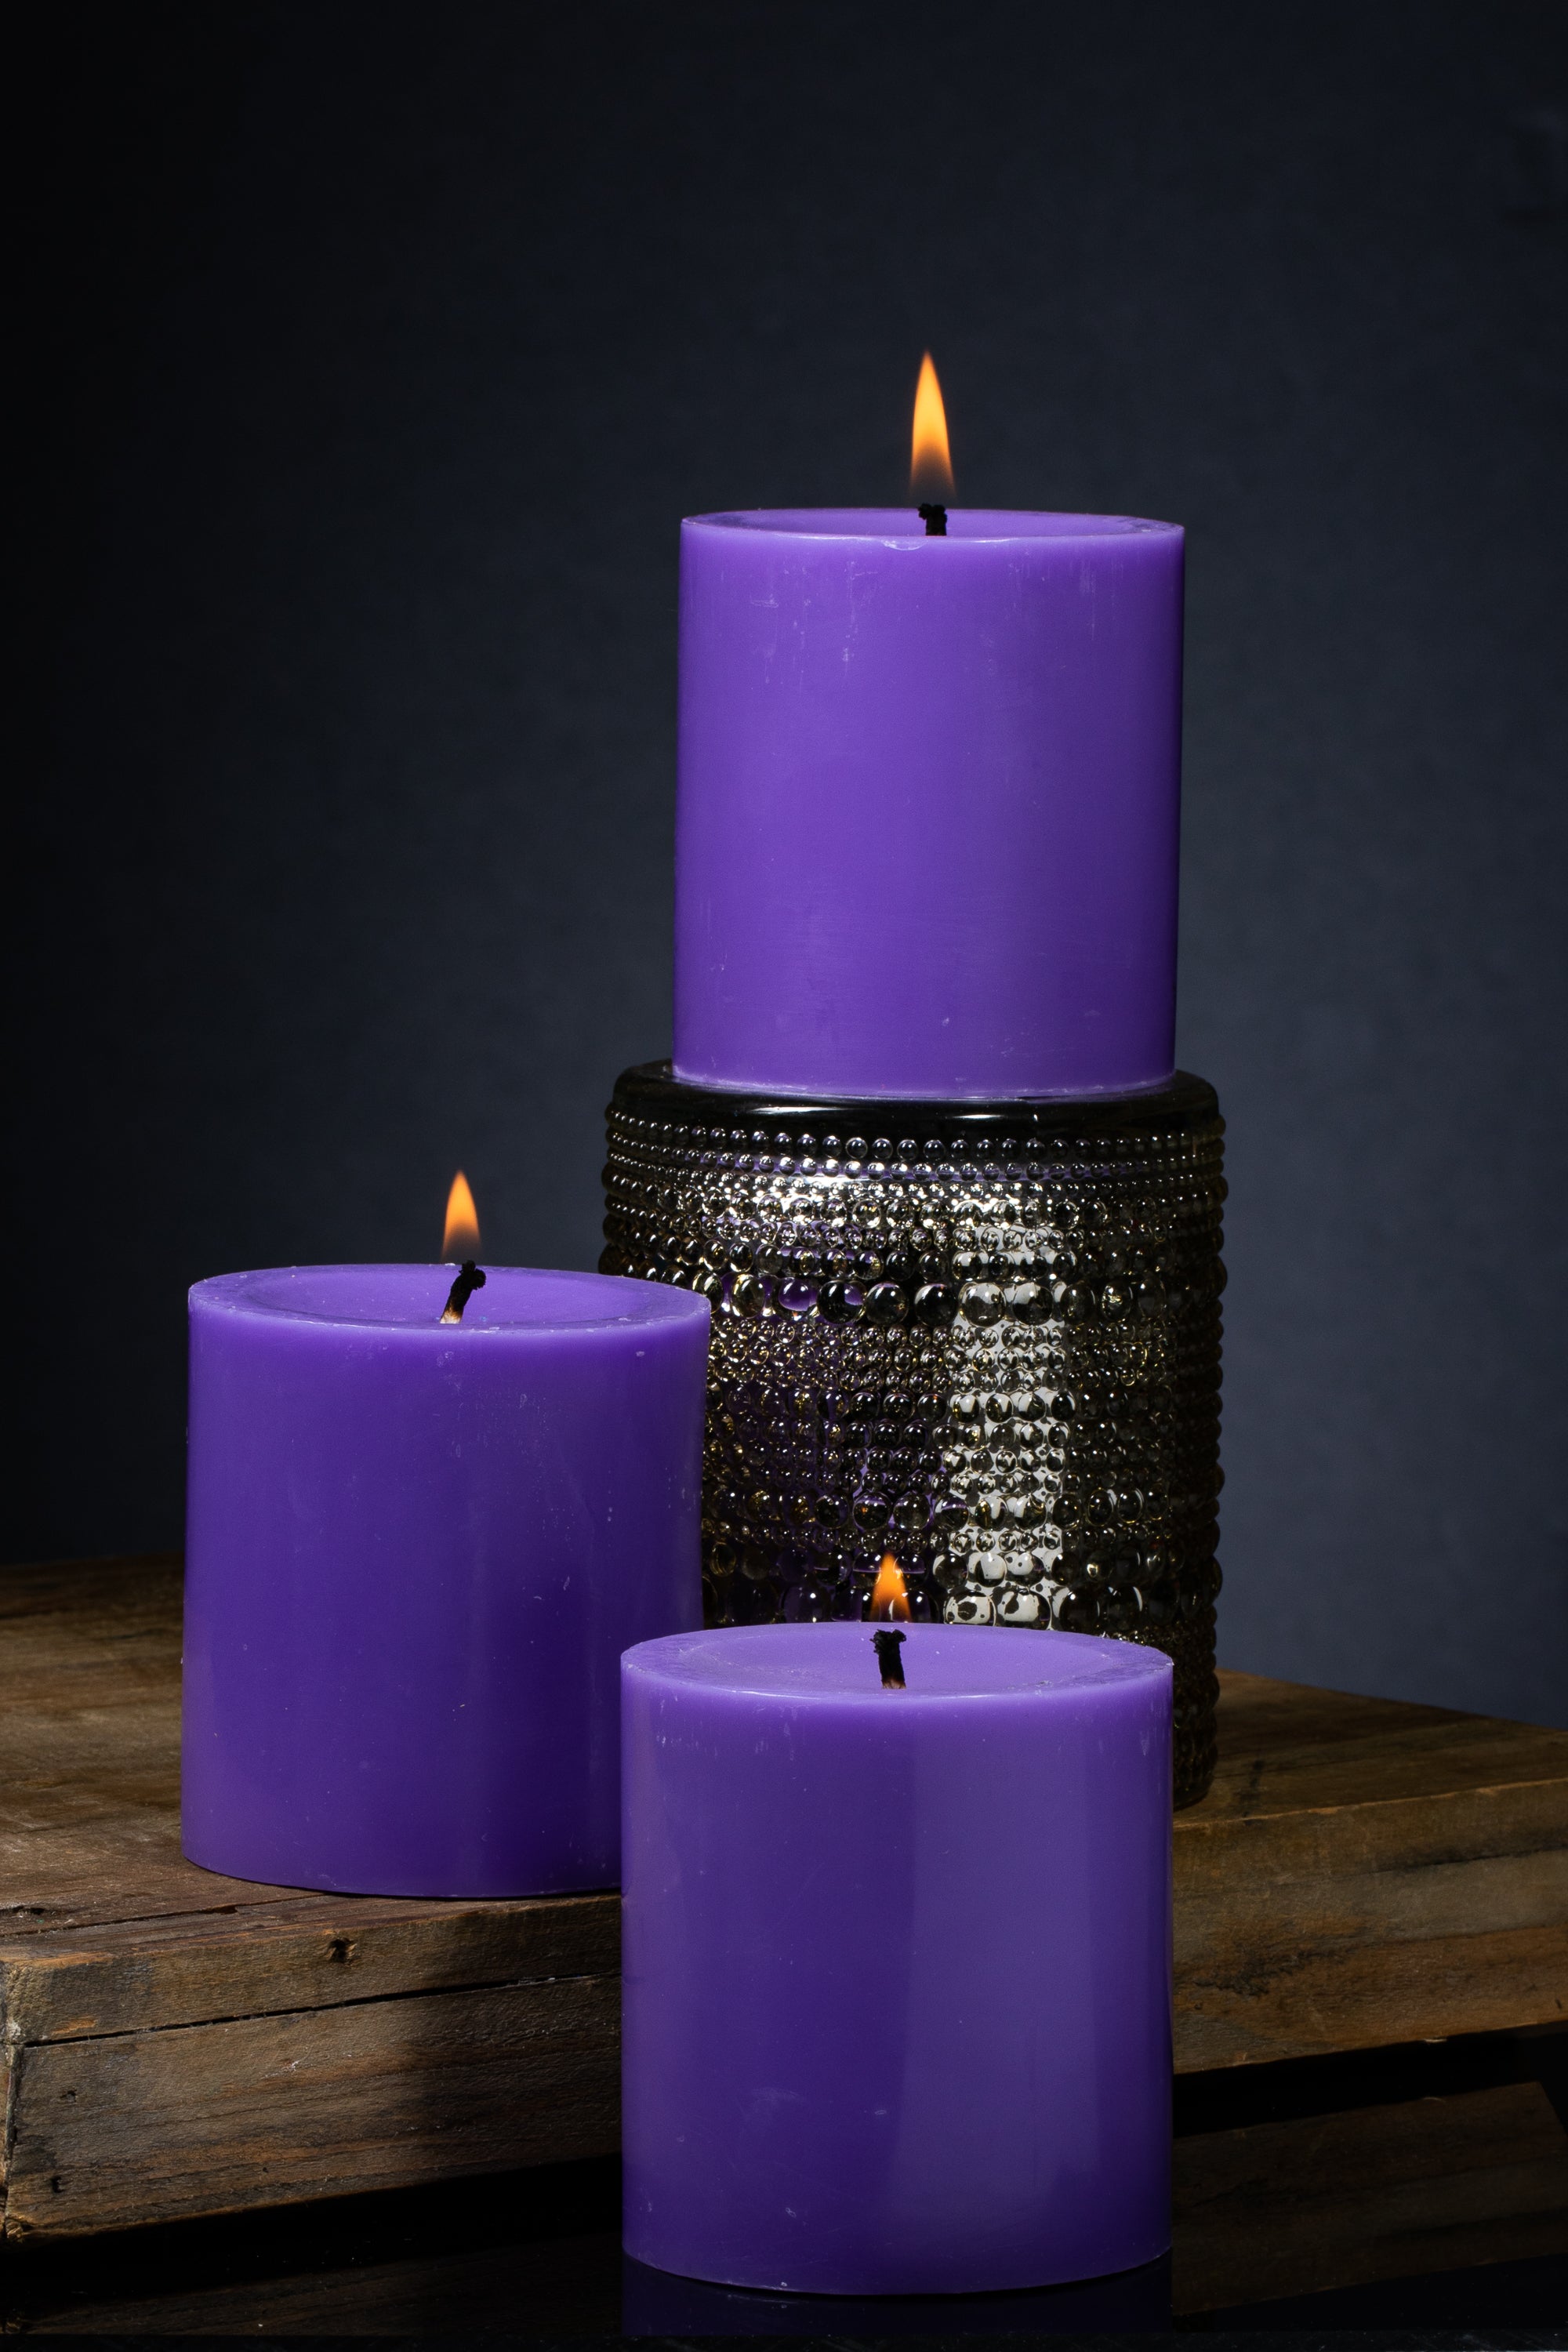 Richland Pillar Candles 3"x3" Lavender Set of 48